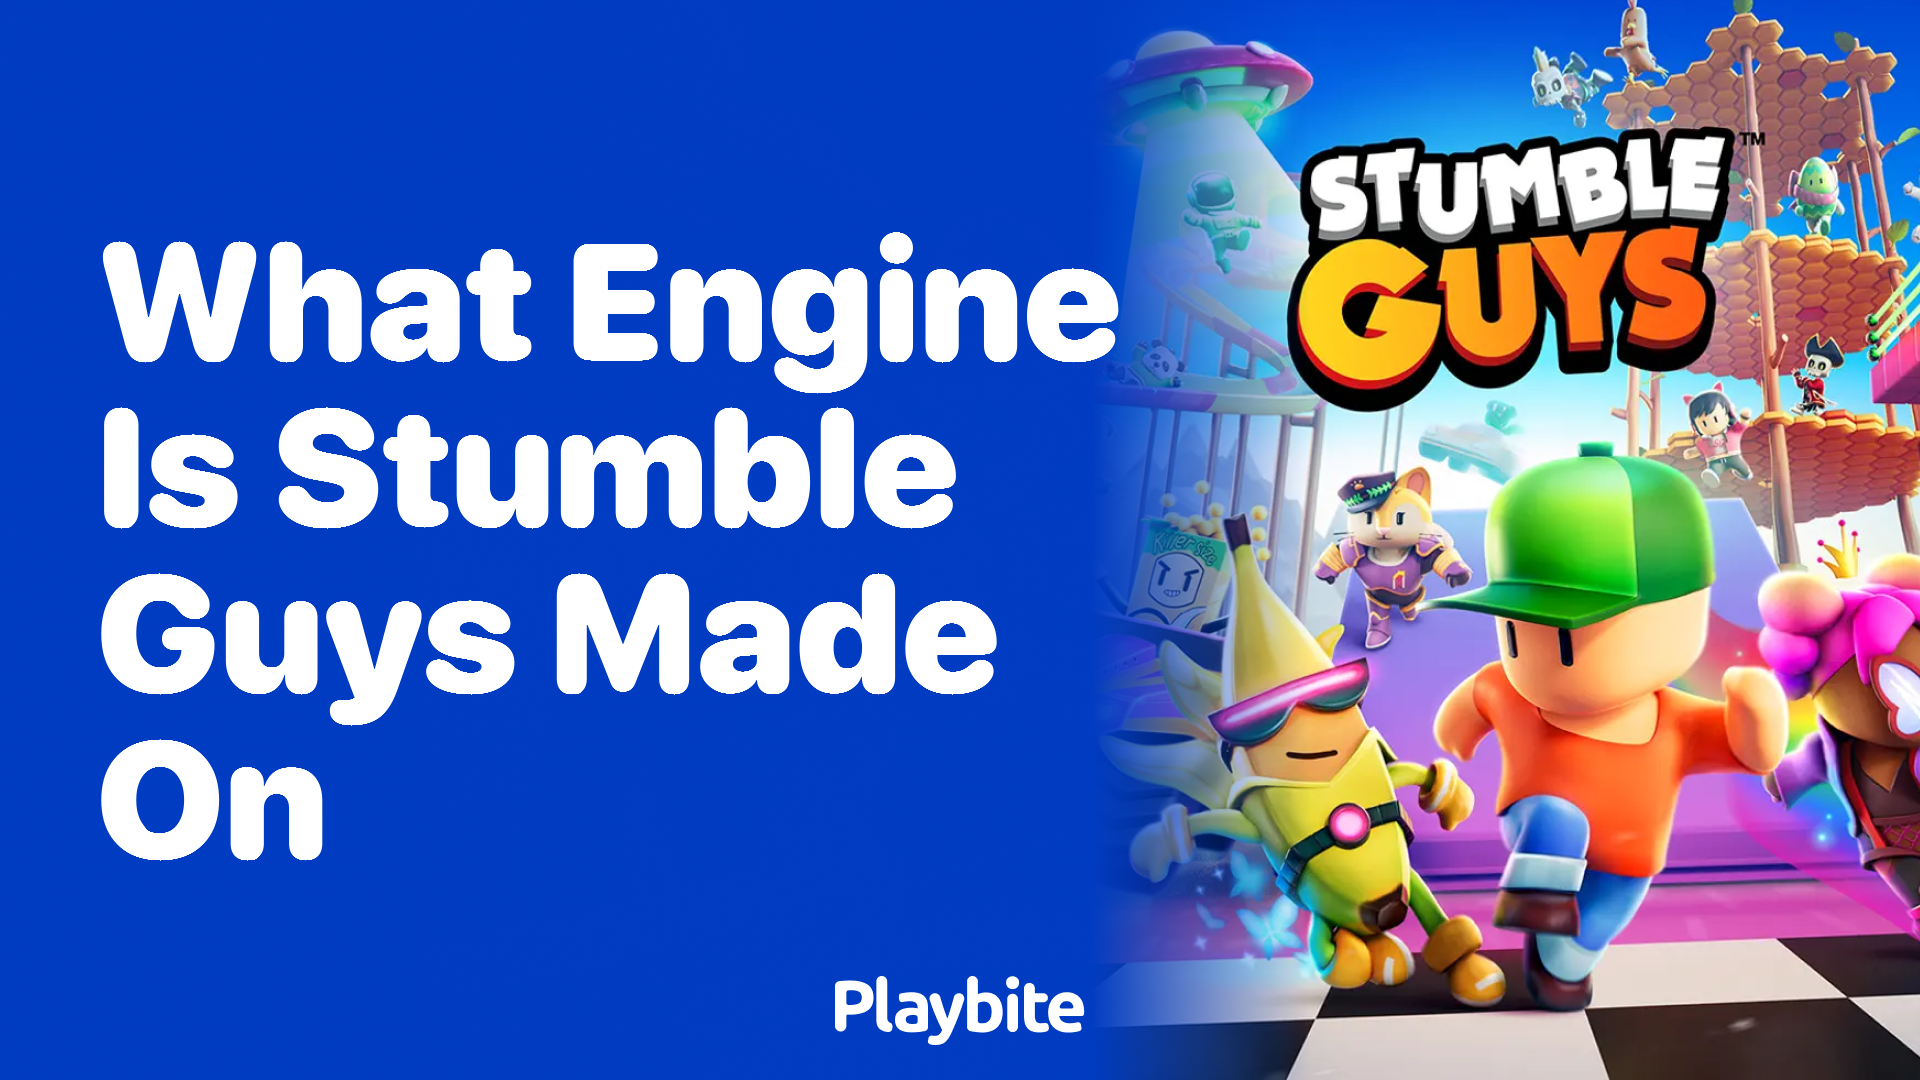 What Engine Powers the Fun in Stumble Guys?